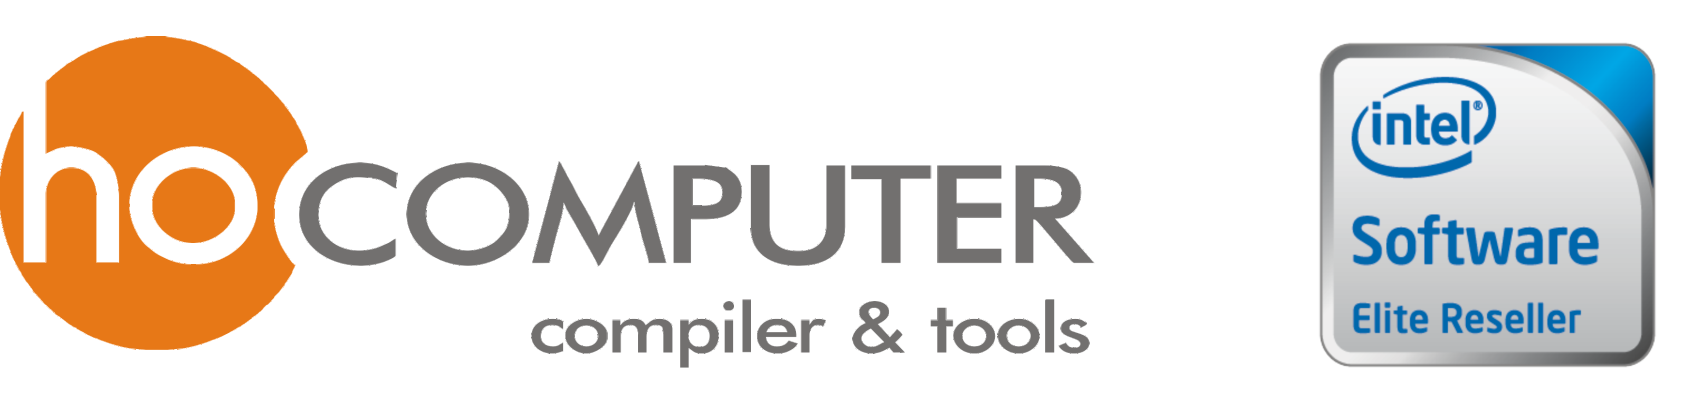 hoComputer Logo